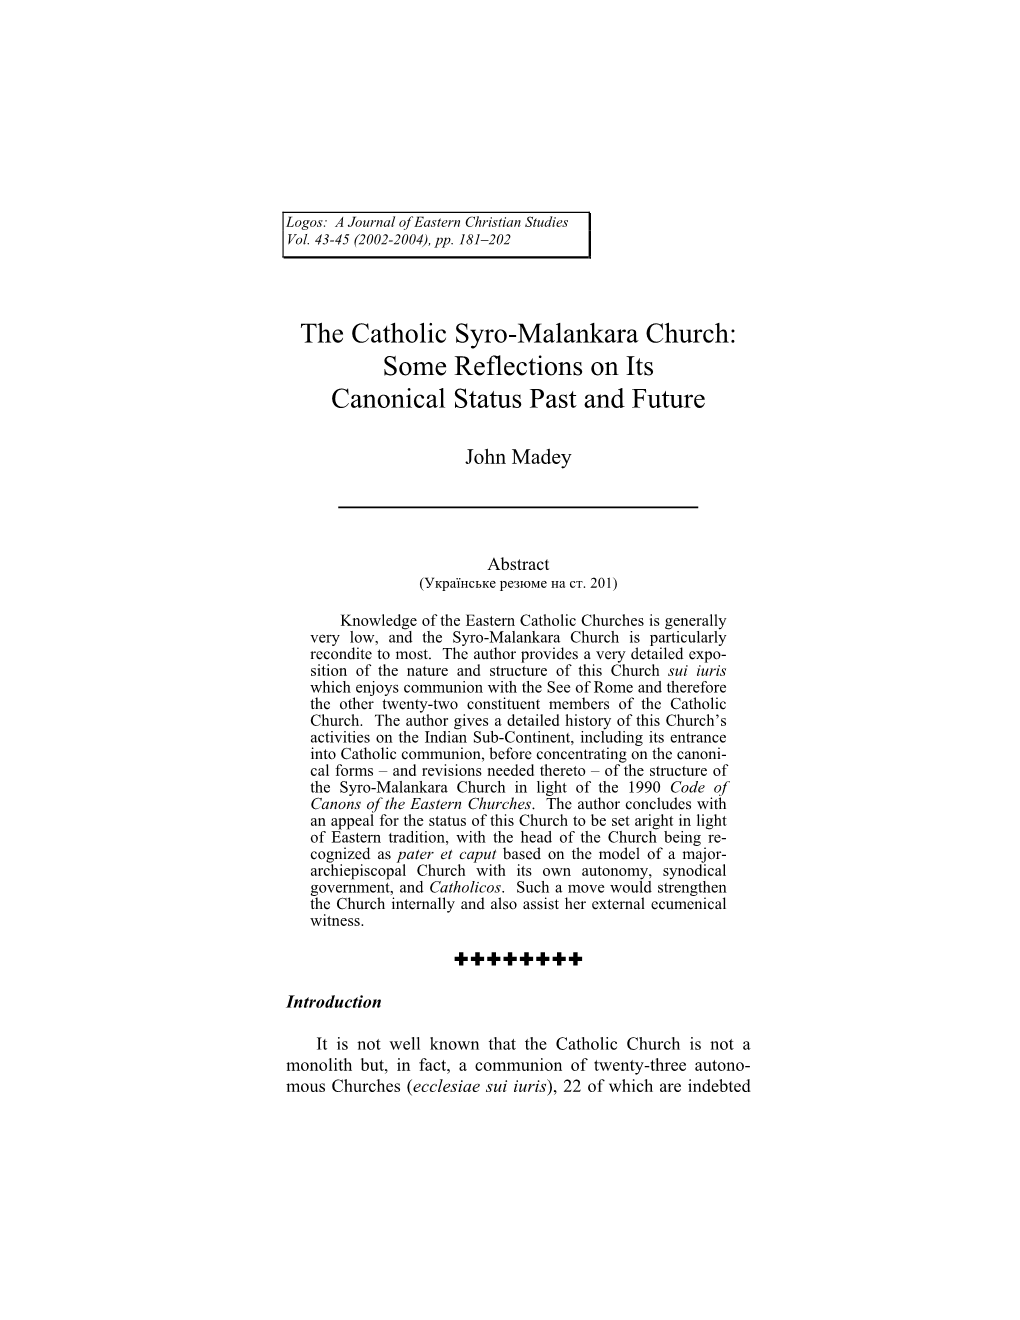 The Catholic Syro-Malankara Church: Some Reflections on Its Canonical Status Past and Future